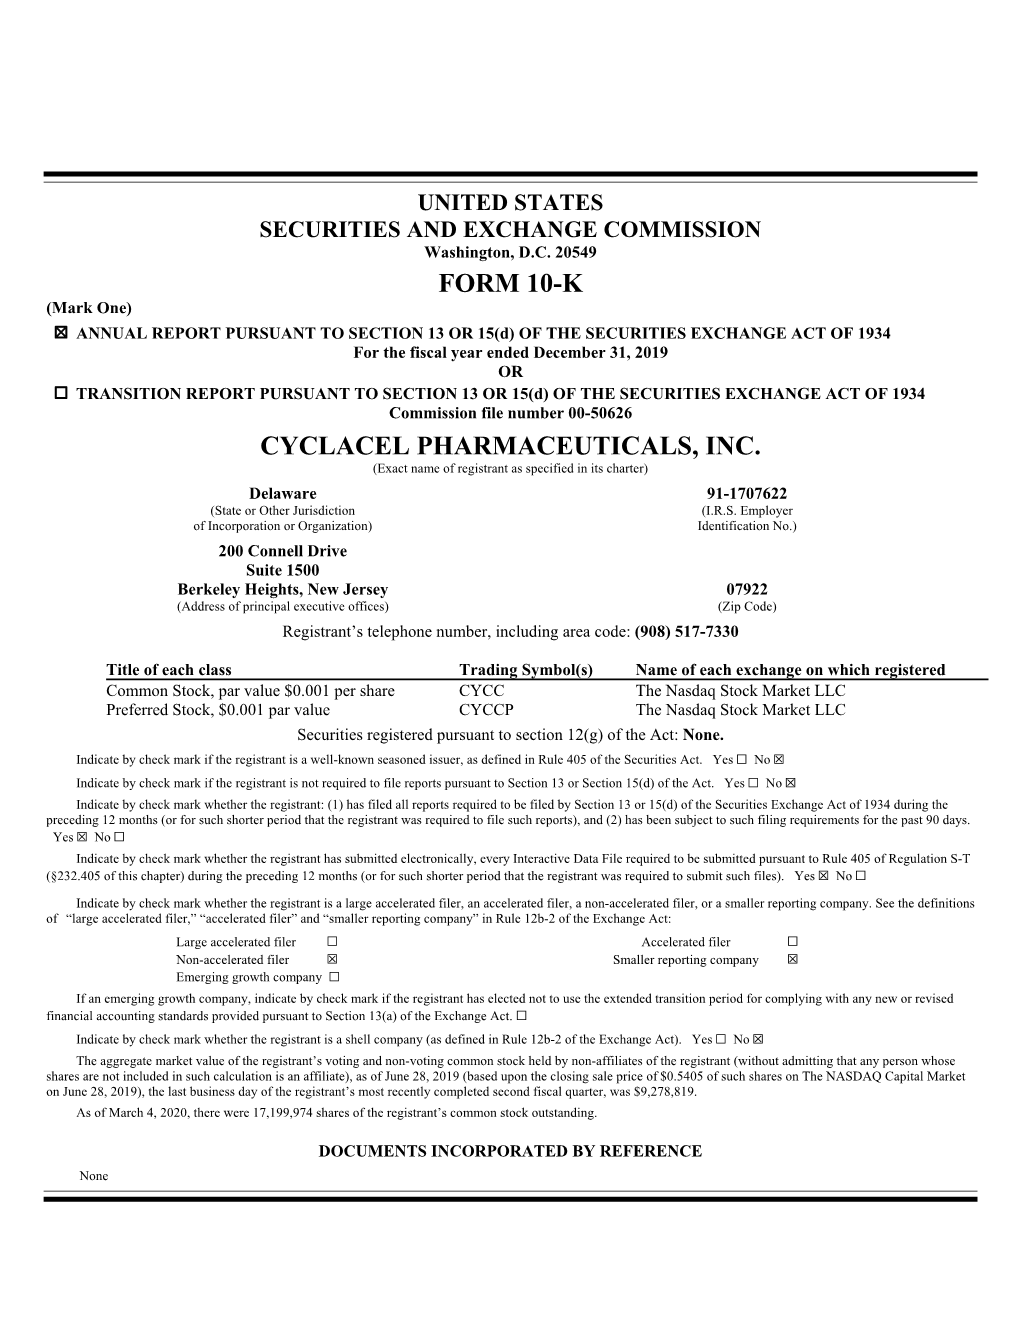 Form 10-K Cyclacel Pharmaceuticals, Inc